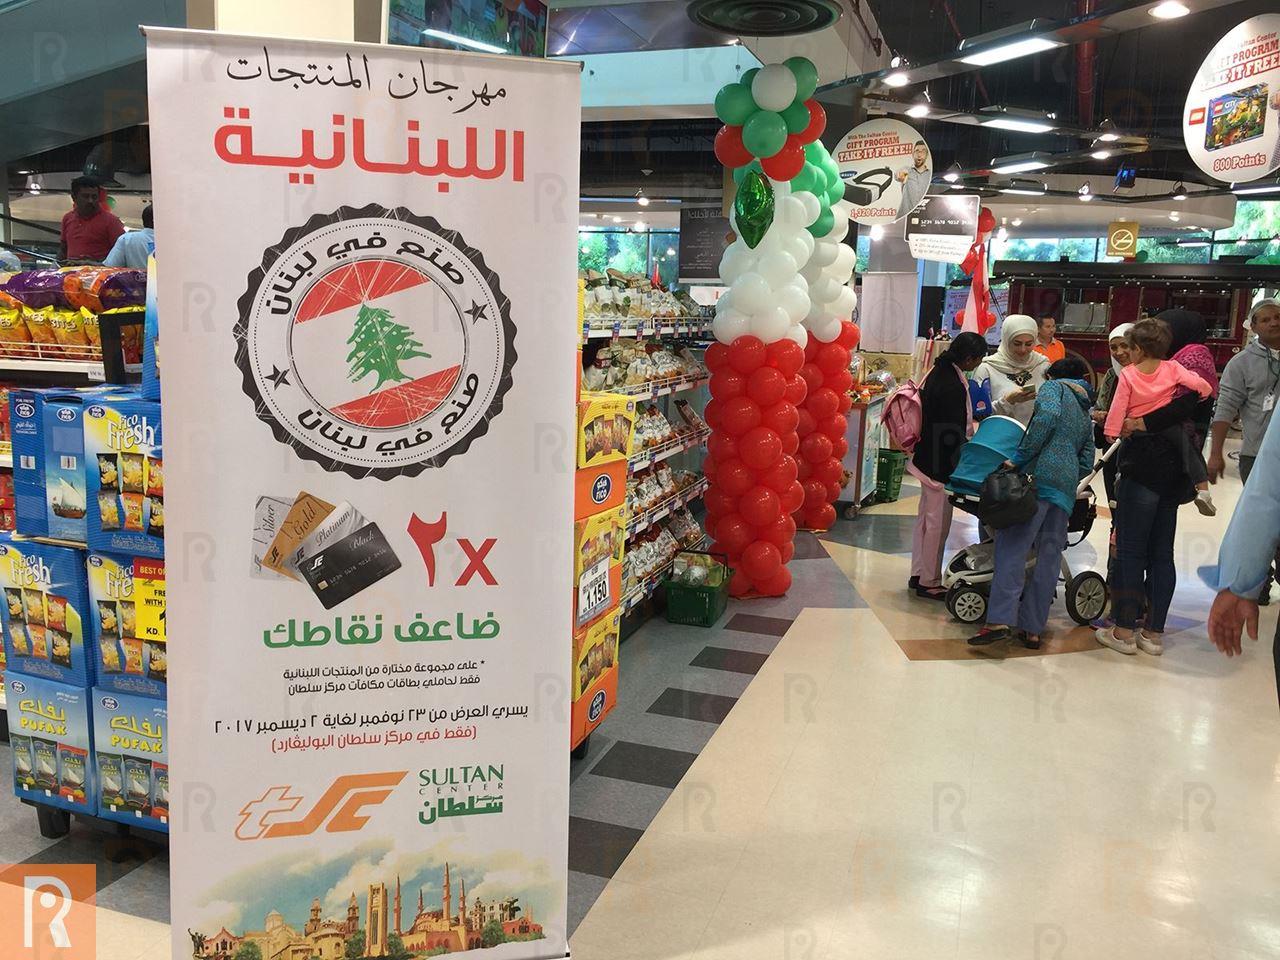 Lebanese Food Festival at The Sultan Center (TSC) Boulevard